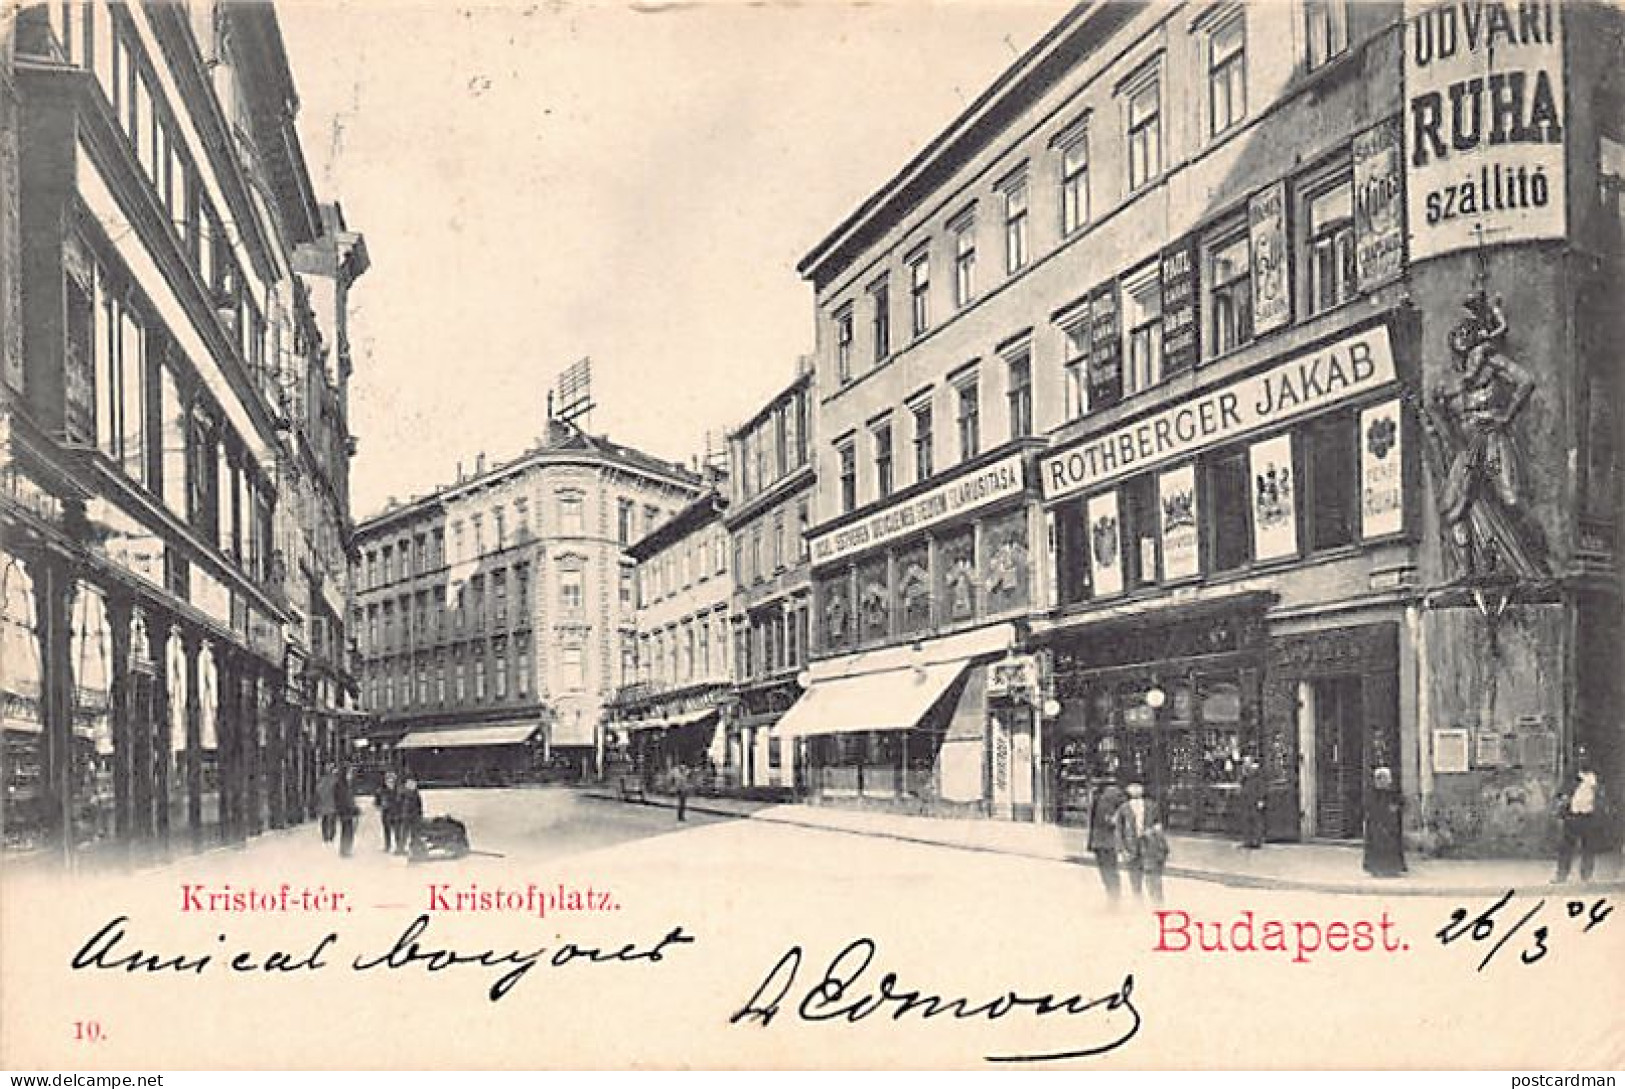 Hungary - BUDAPEST - Rothberger Jakab Shop - Kristof-tér. - Hungary